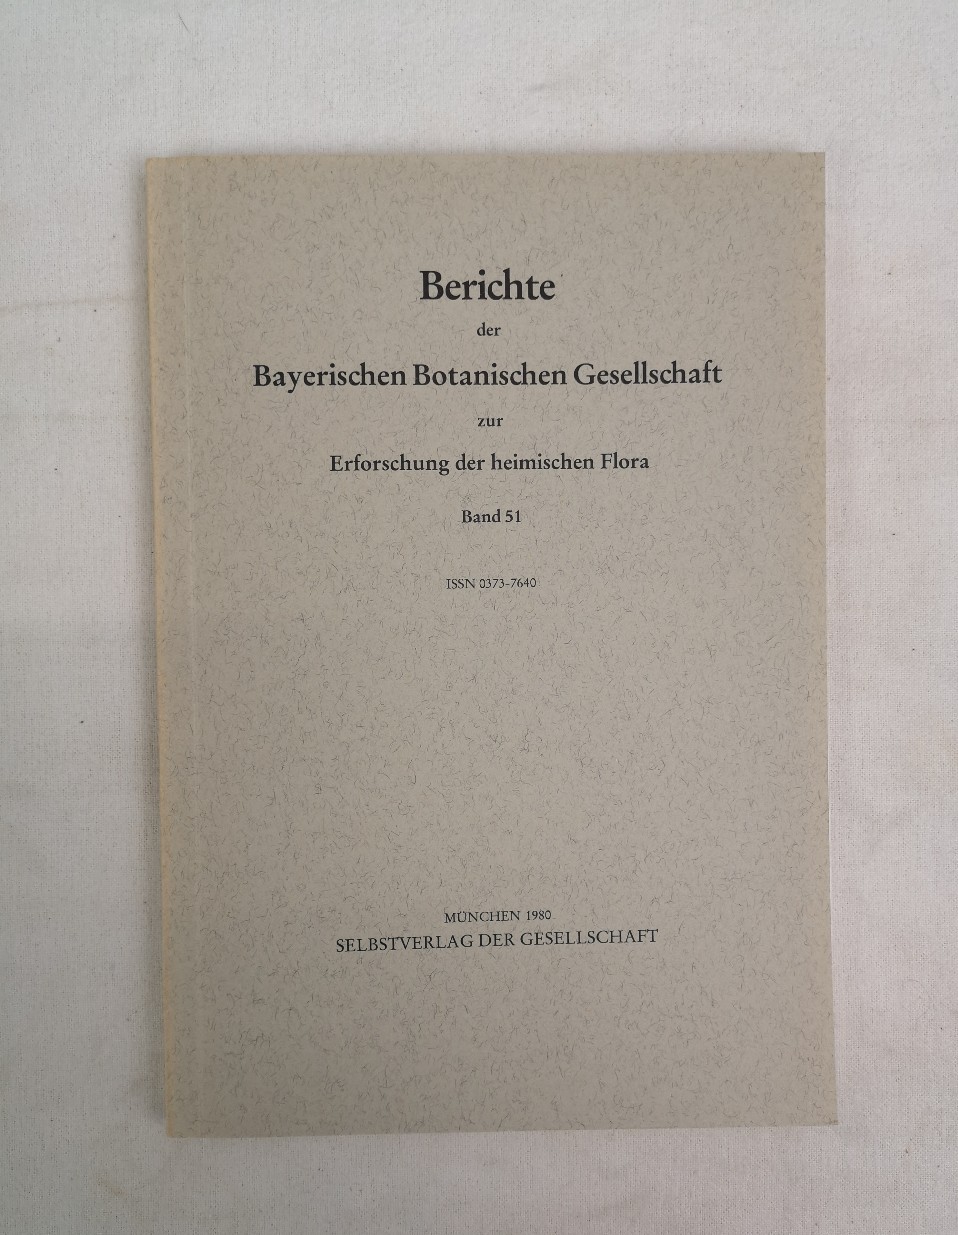 Lippert, Wolfgang (Schriftltg.):  Berichte der Bayerischen Botanischen Gesellschaft zur Erforschung der heimischen Flora. Band 51 